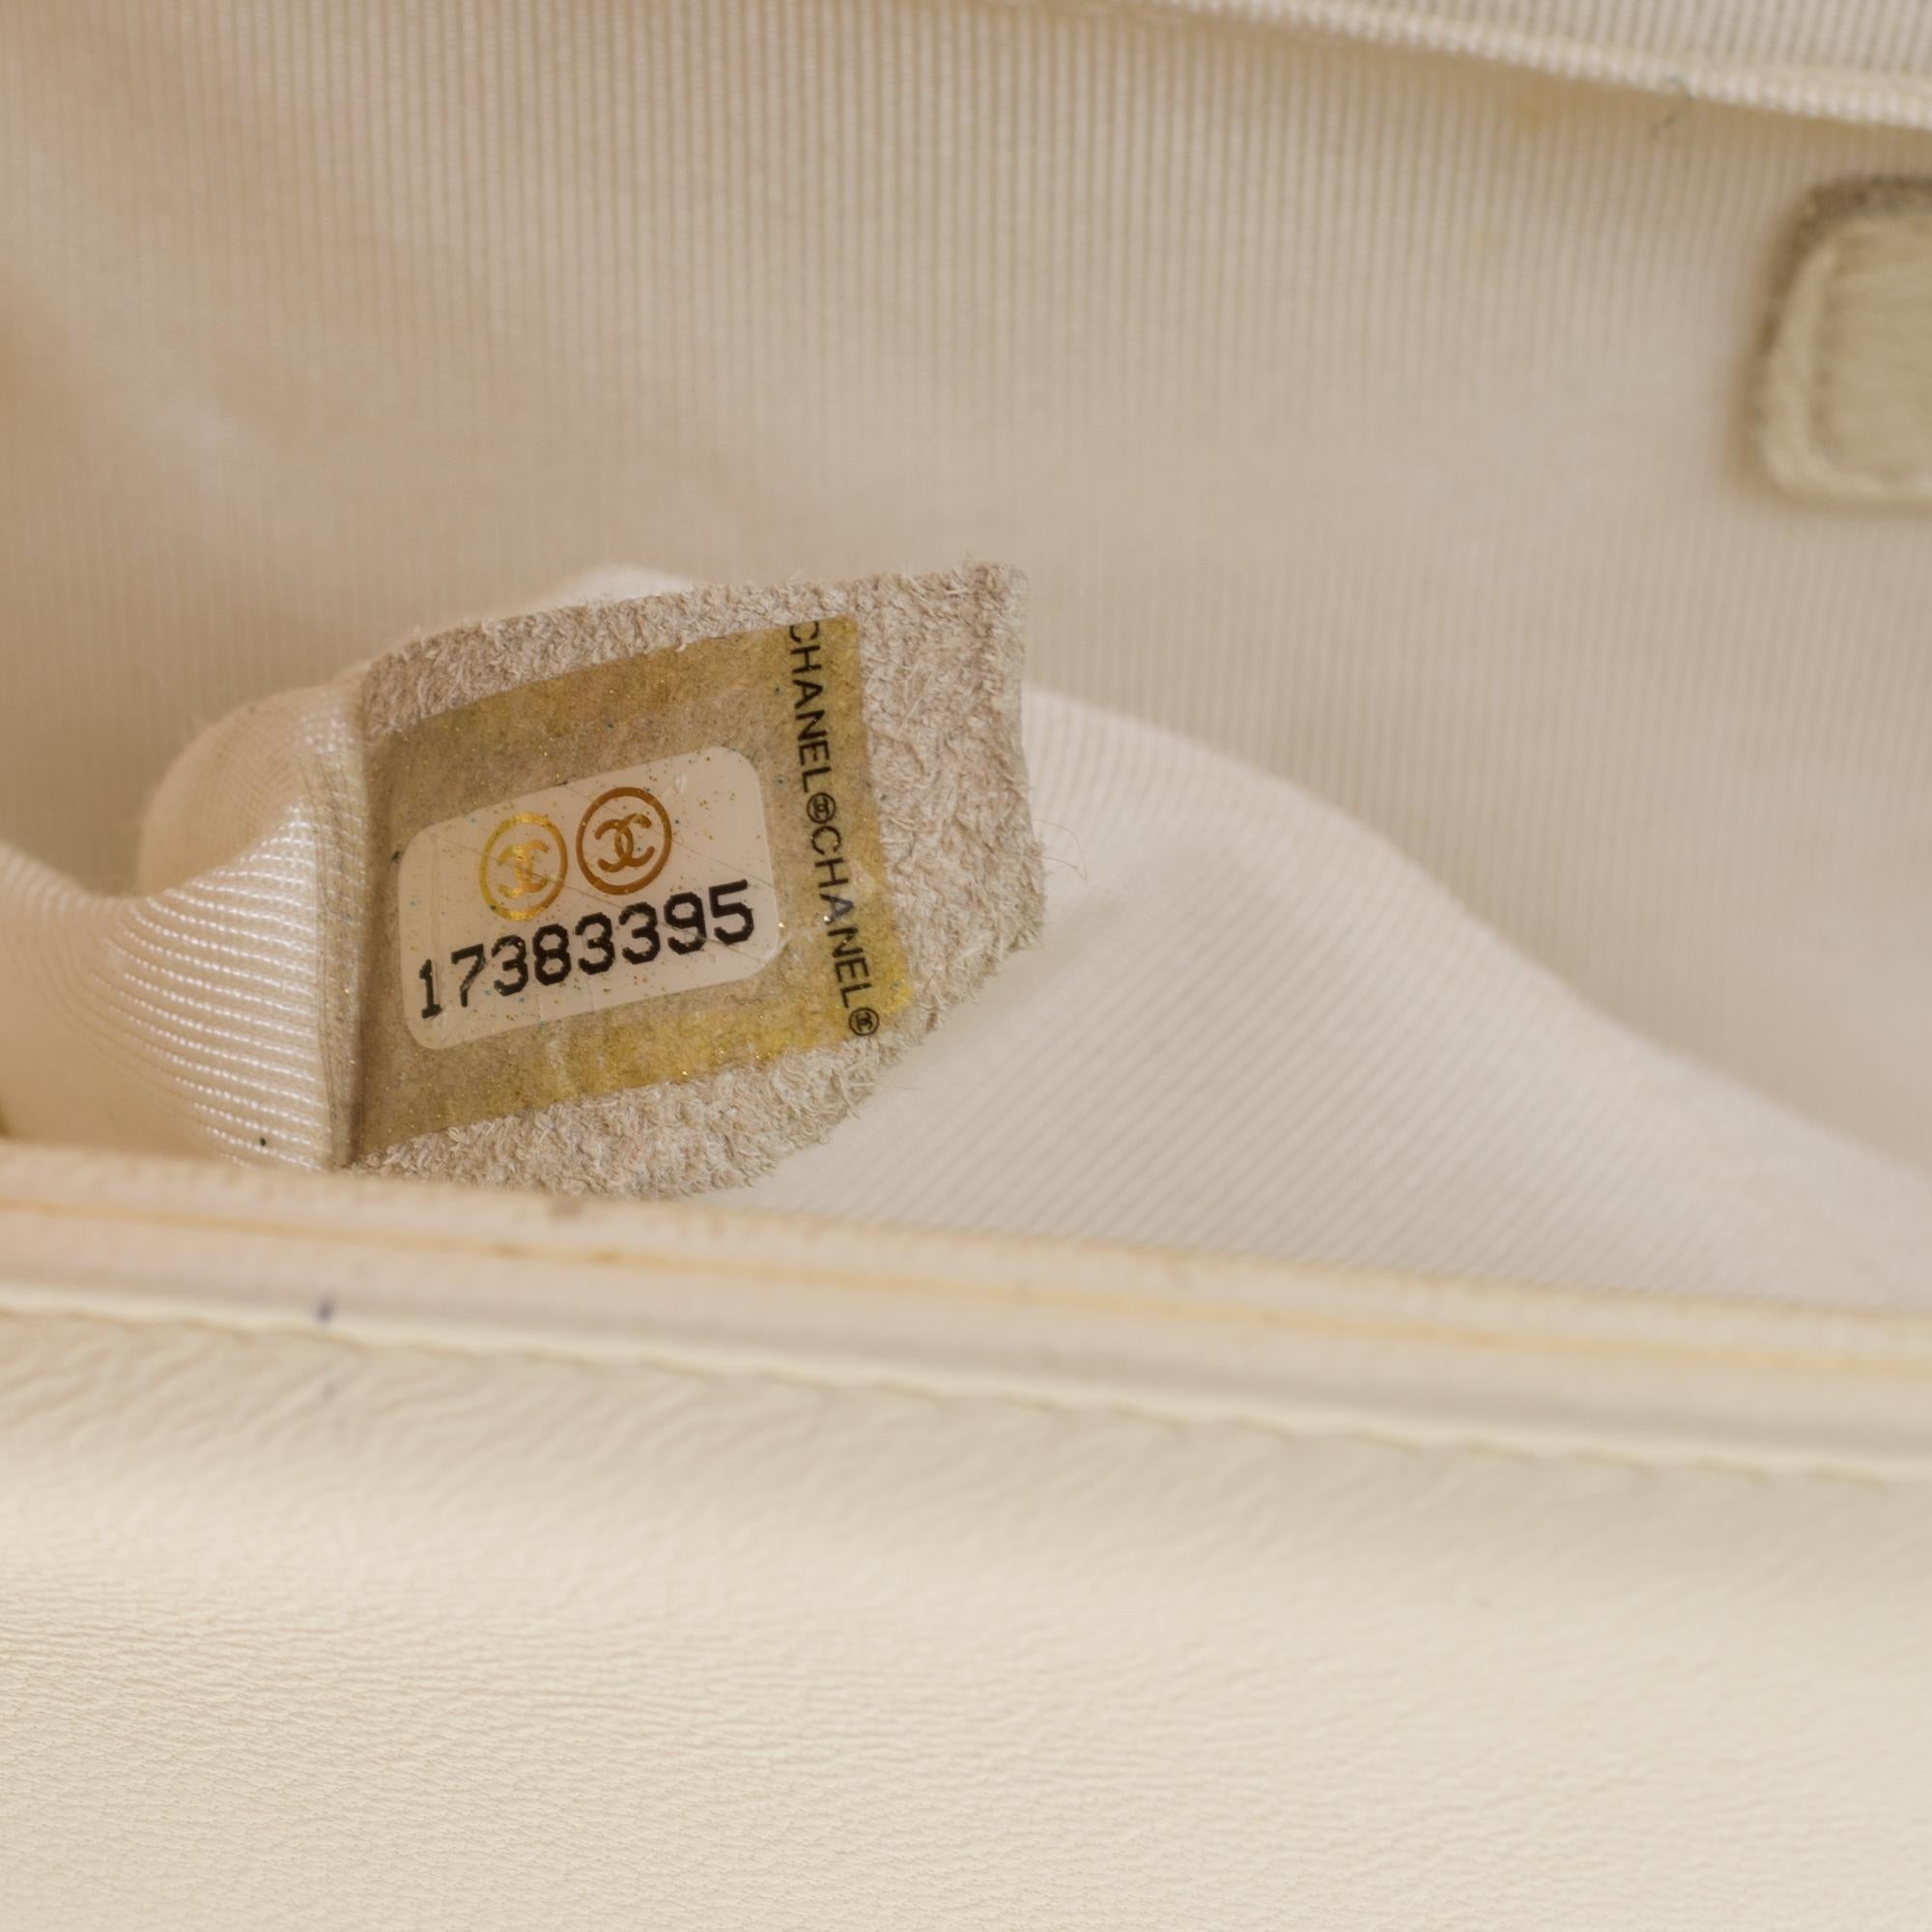 Chanel Boy Paris/Edinburgh handbag in ivory embossed leather, GHW ! 2